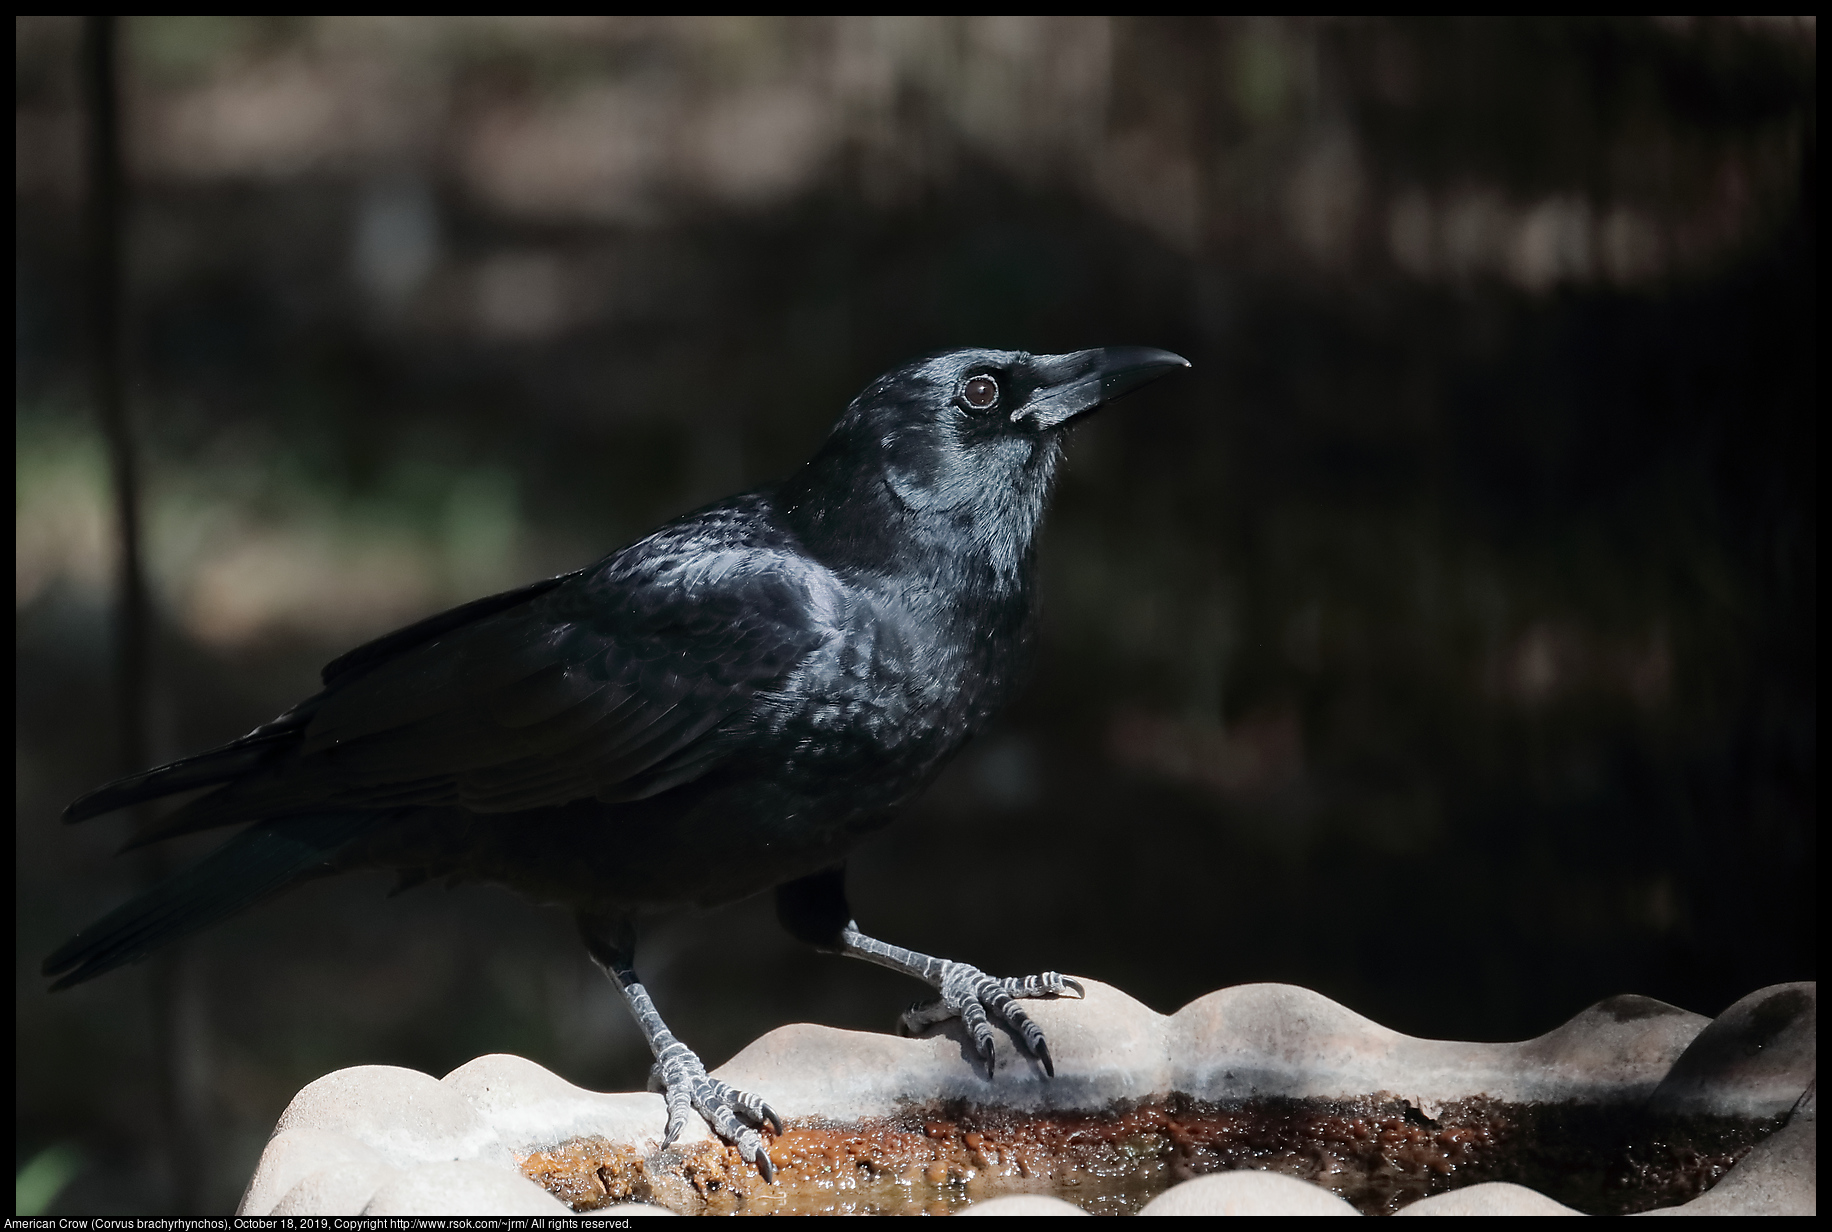 American Crow (Corvus brachyrhynchos), October 18, 2019